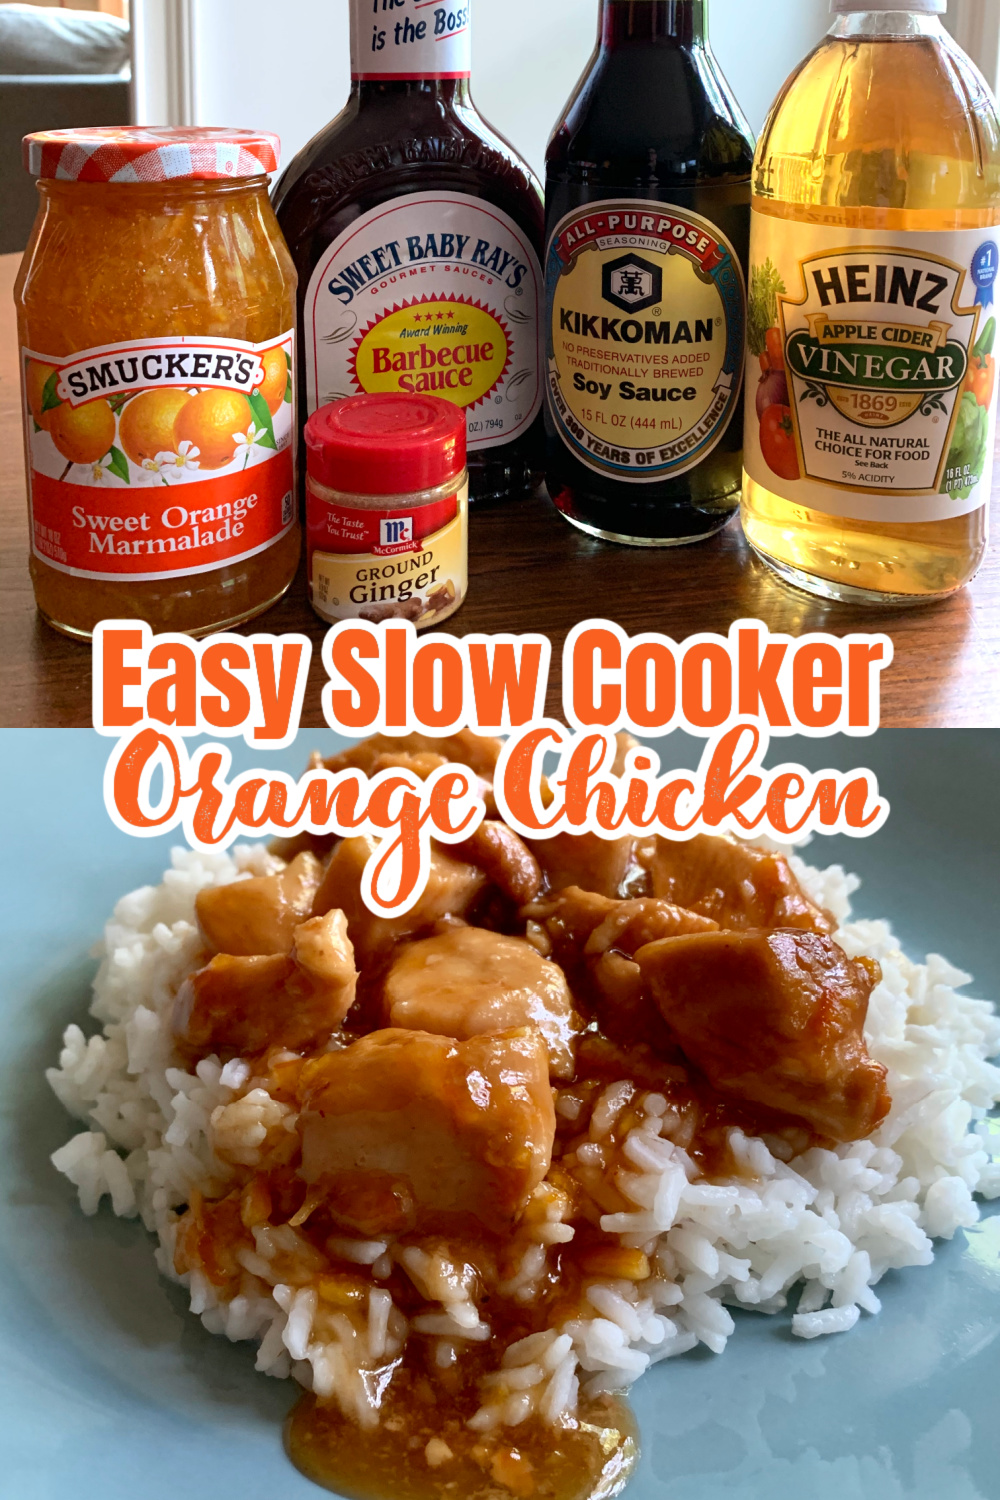 Easy Slow Cooker Orange Chicken Ingredients